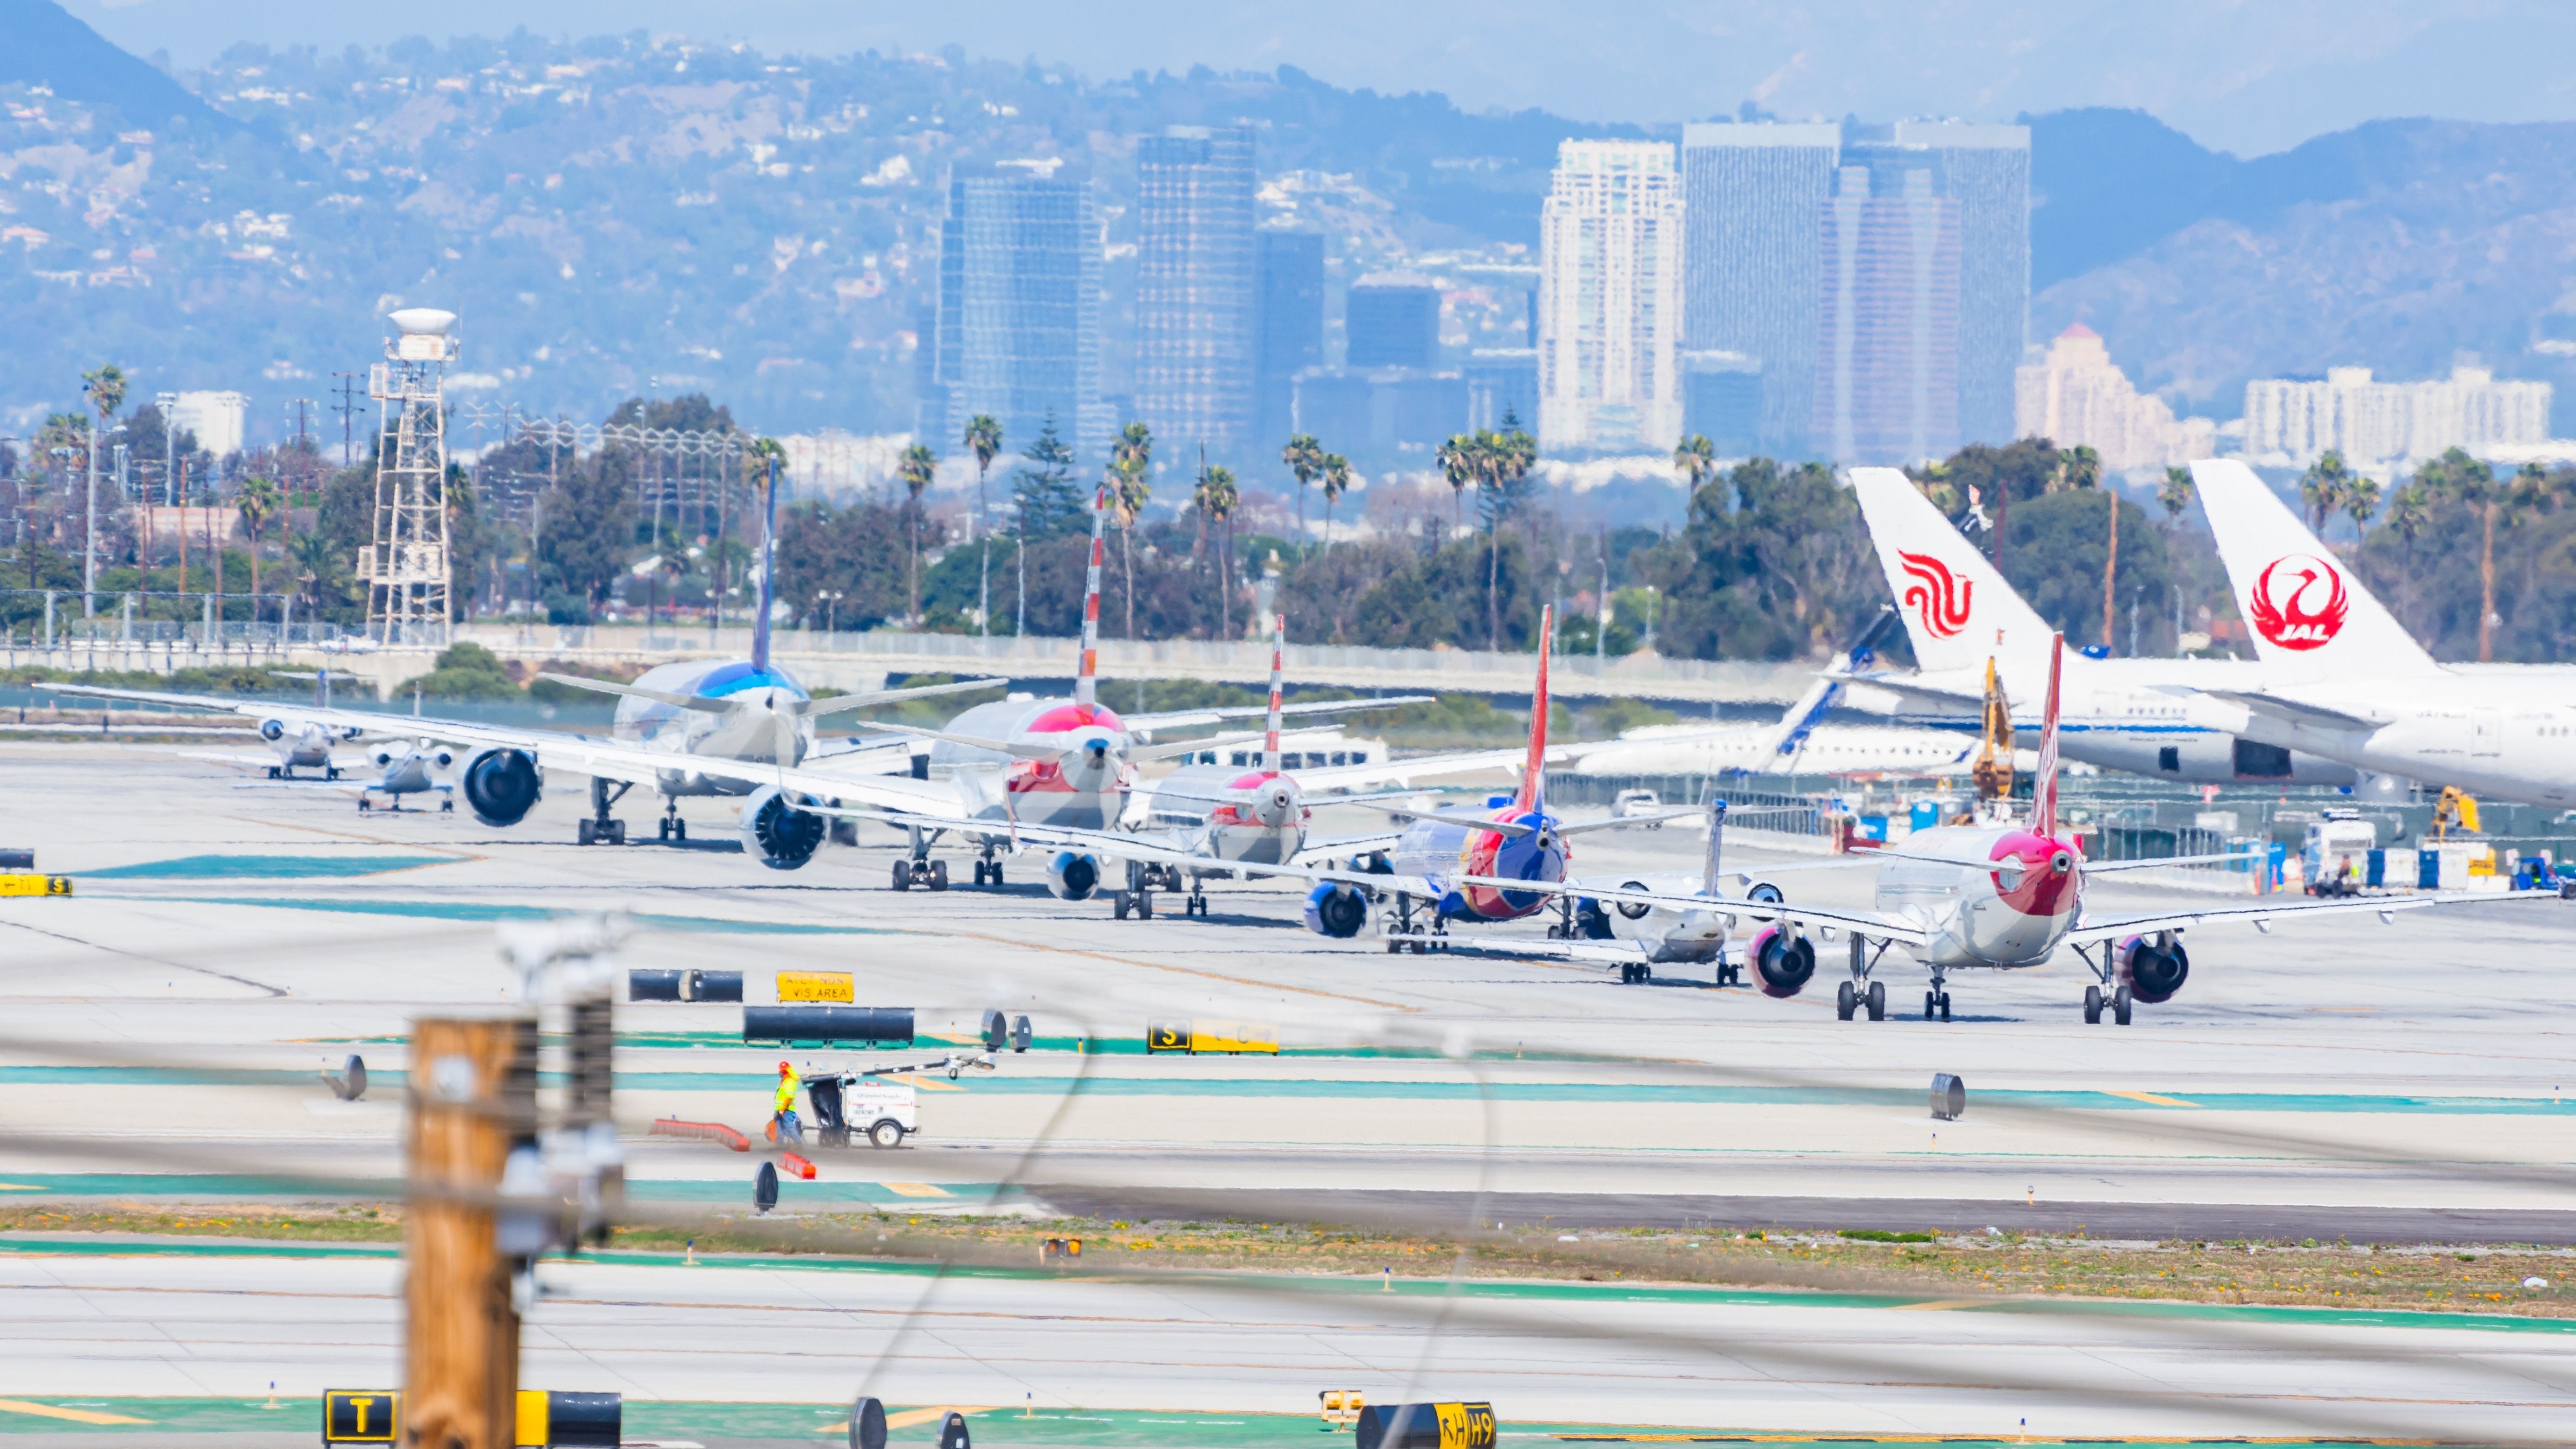 Aircraft lined up at Los Angeles International